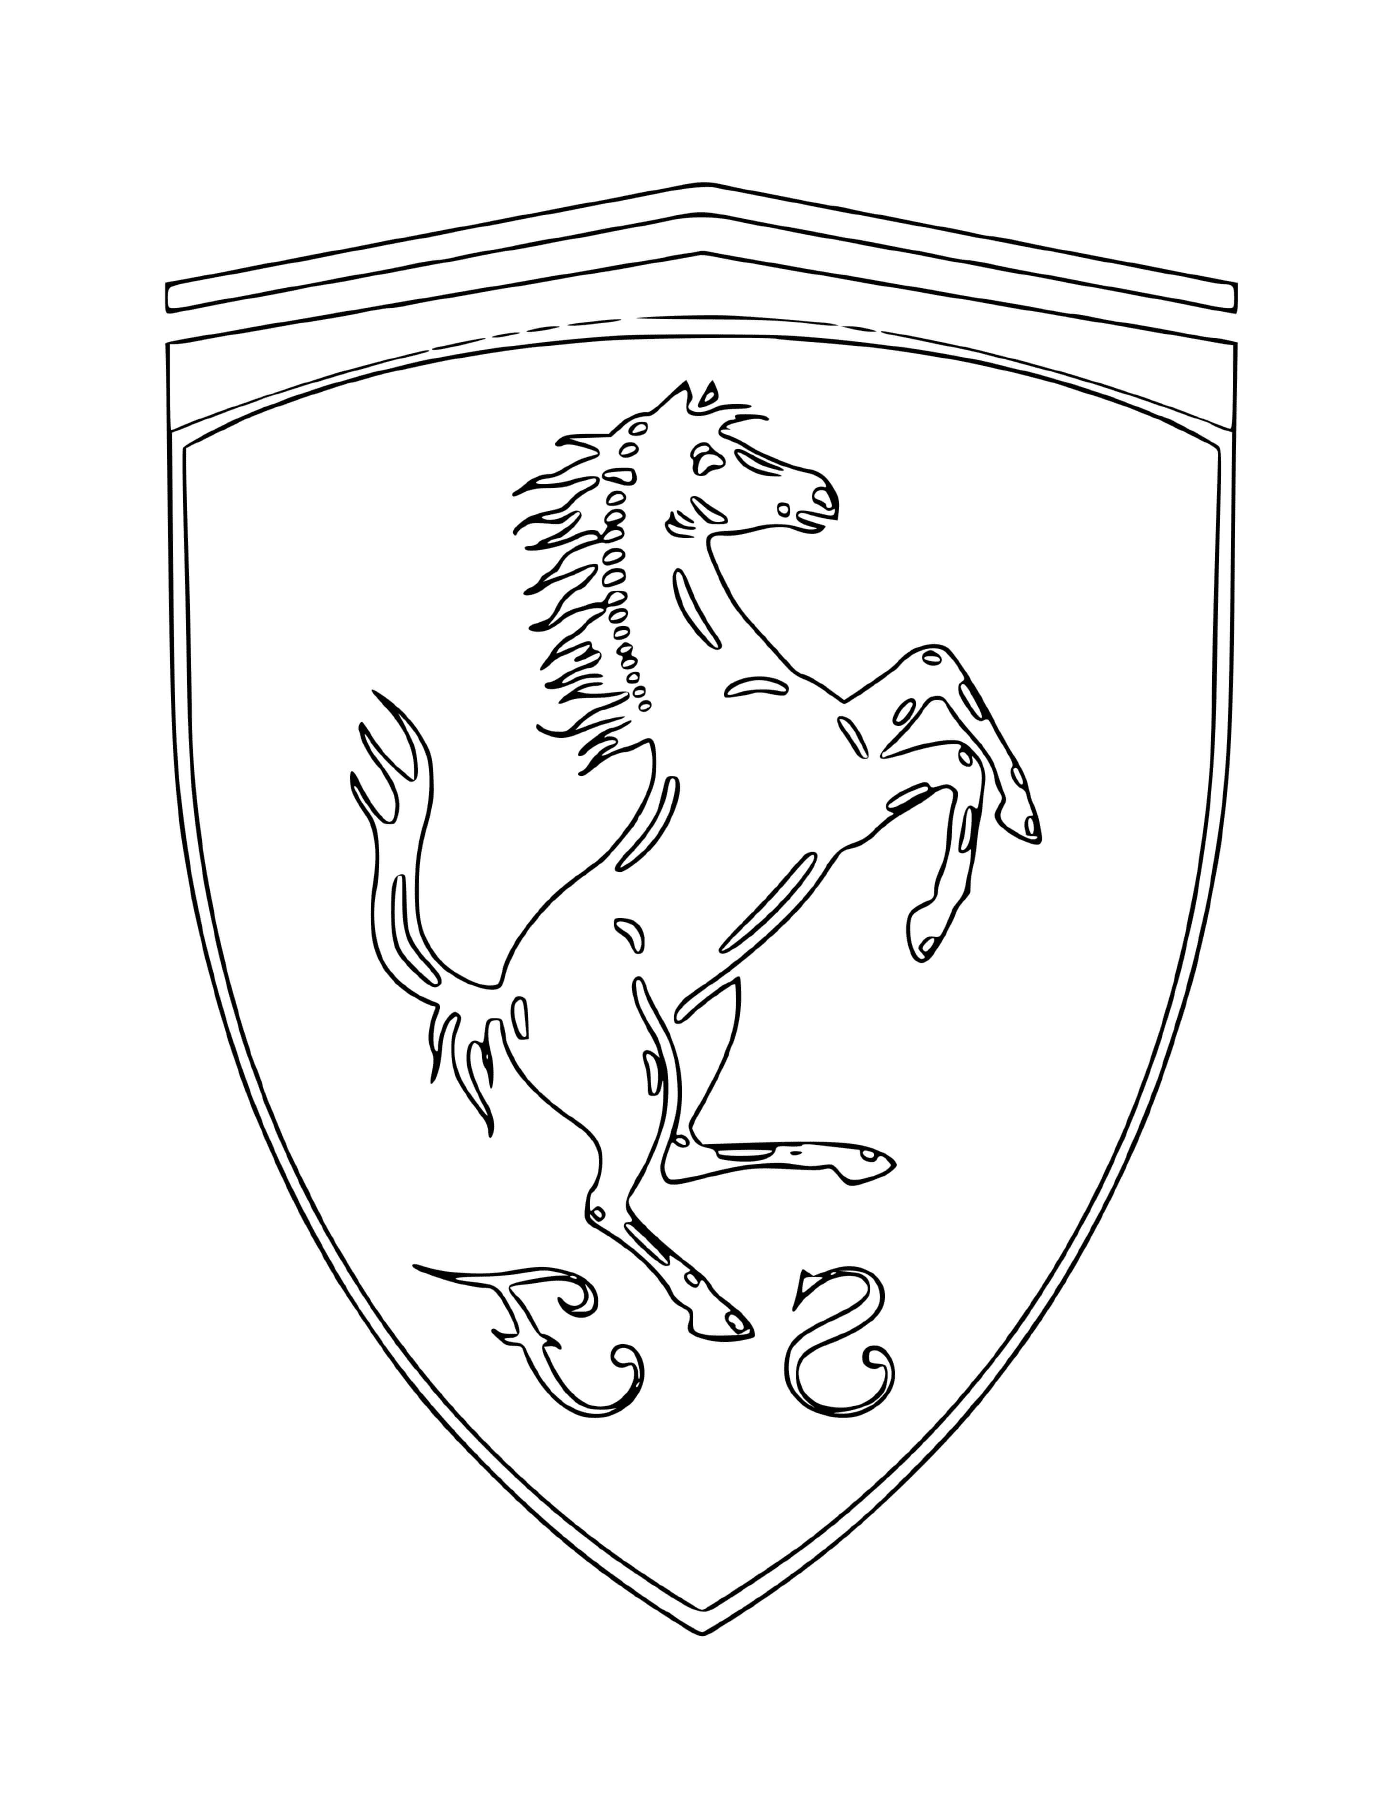  Логотип машины Феррари с лошадью 